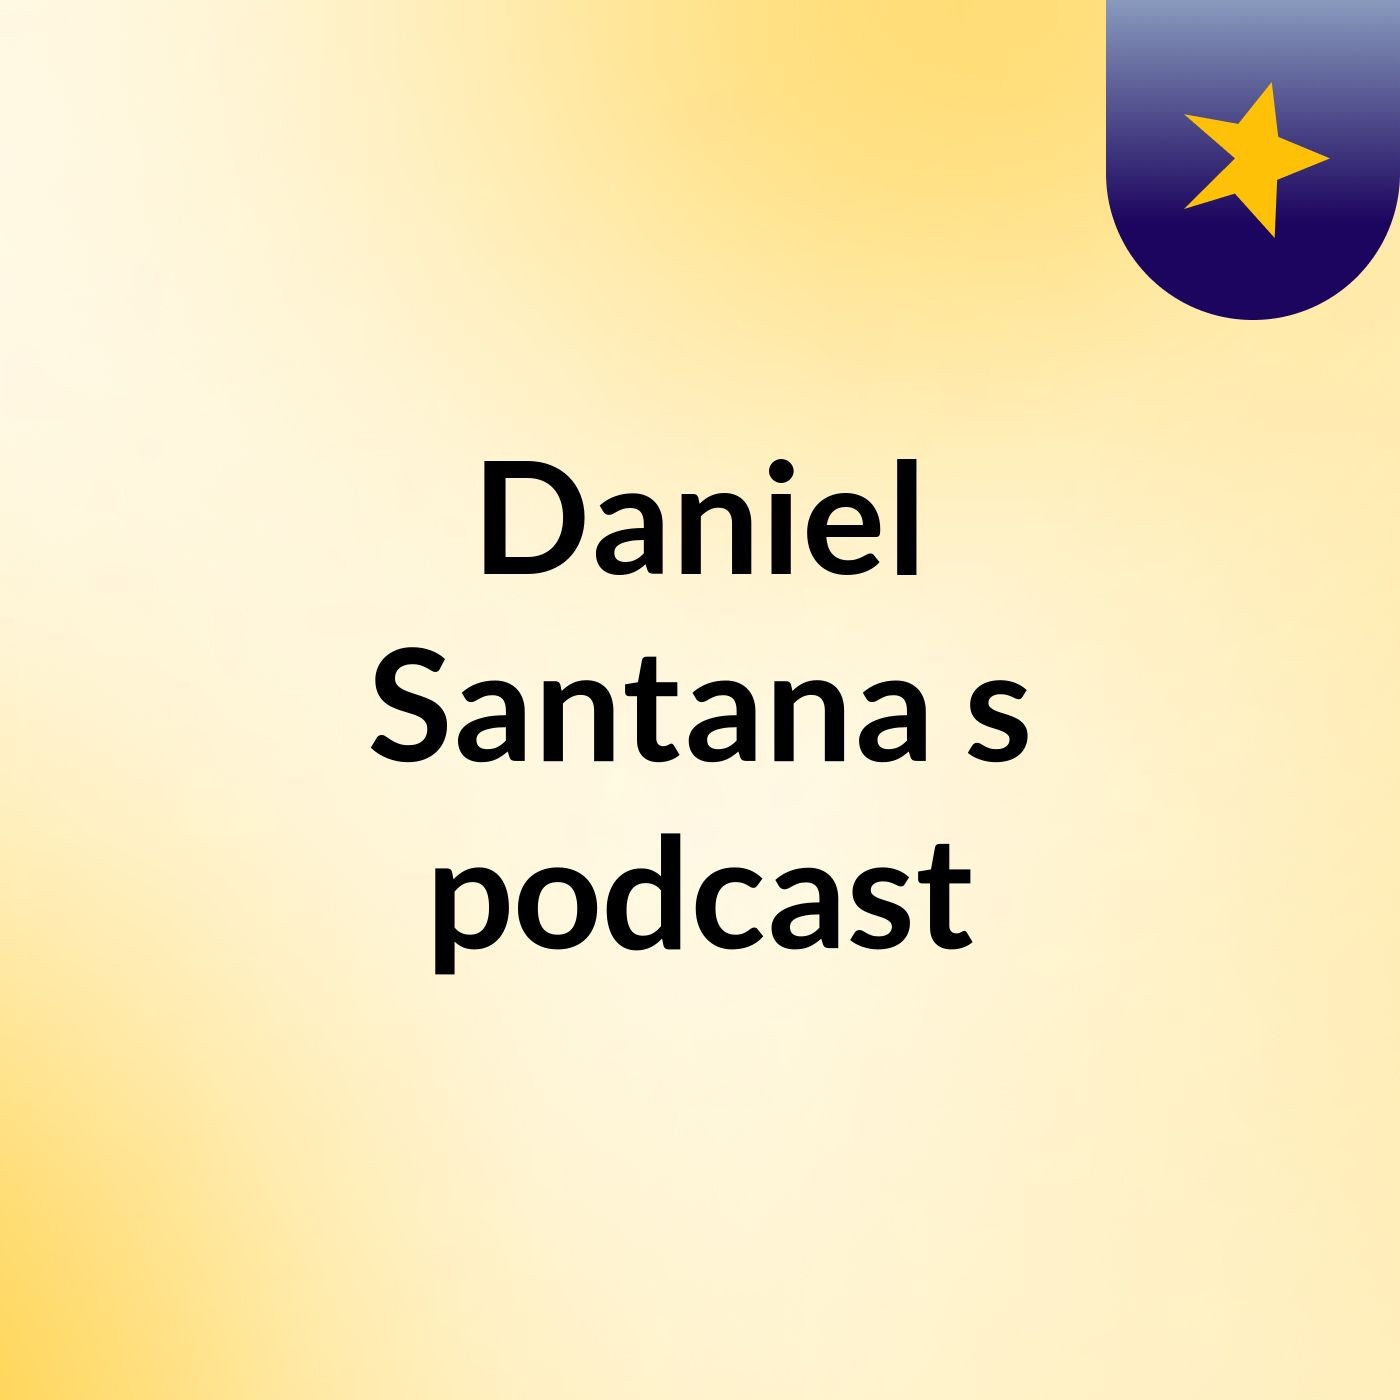 Daniel Santana's podcast